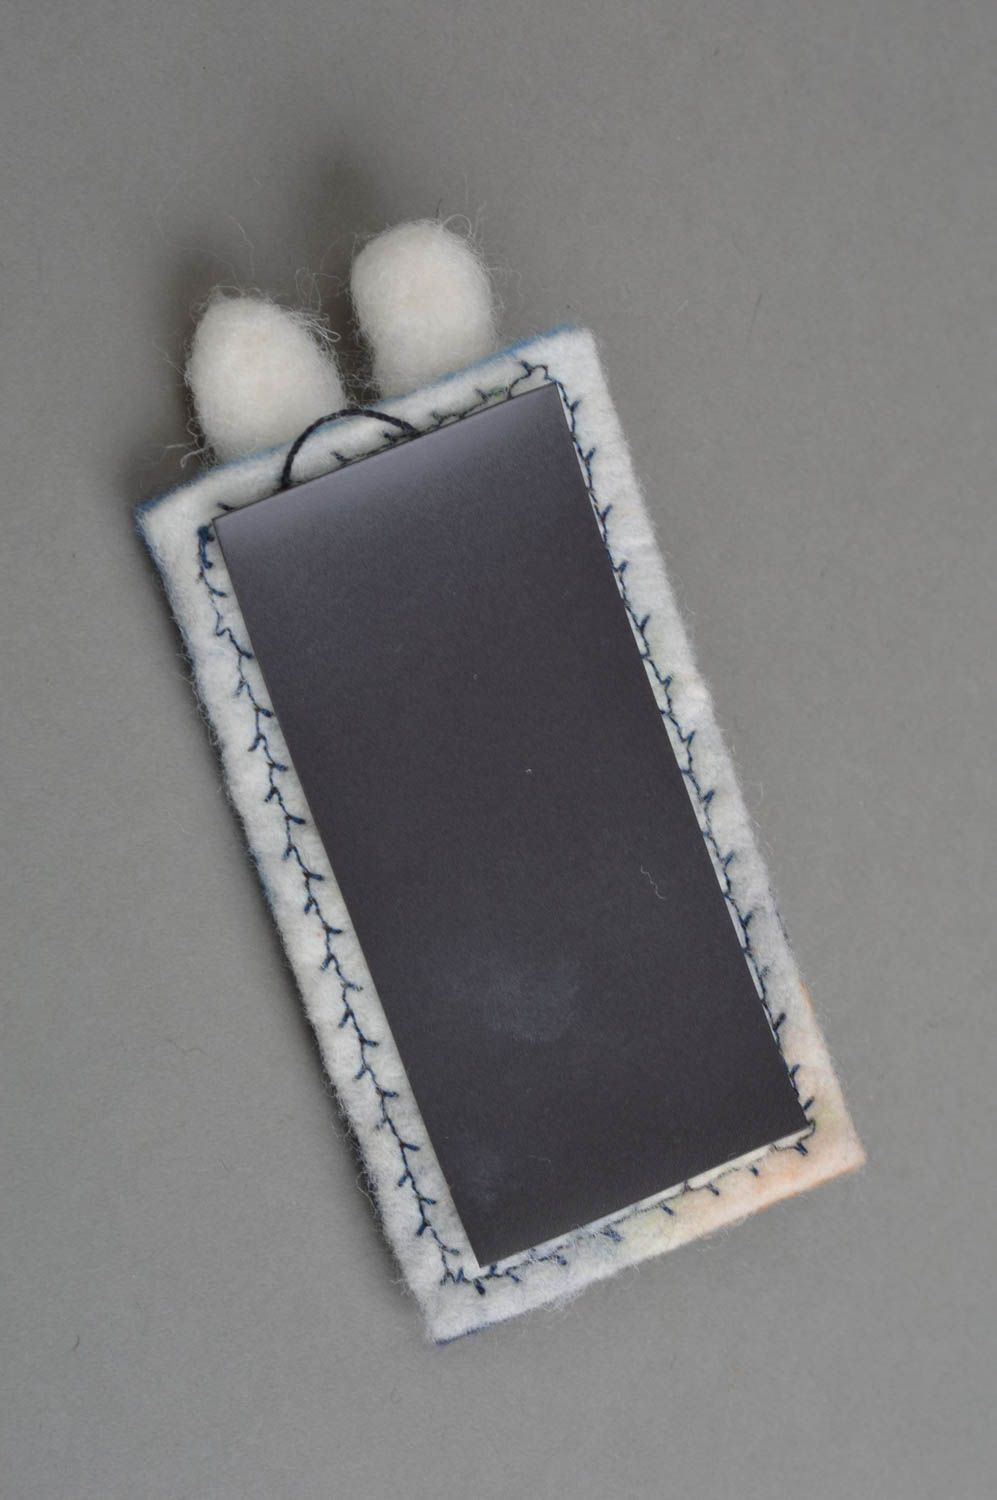 Wool felting fridge magnet with white bunny small beautiful handmade home decor photo 5